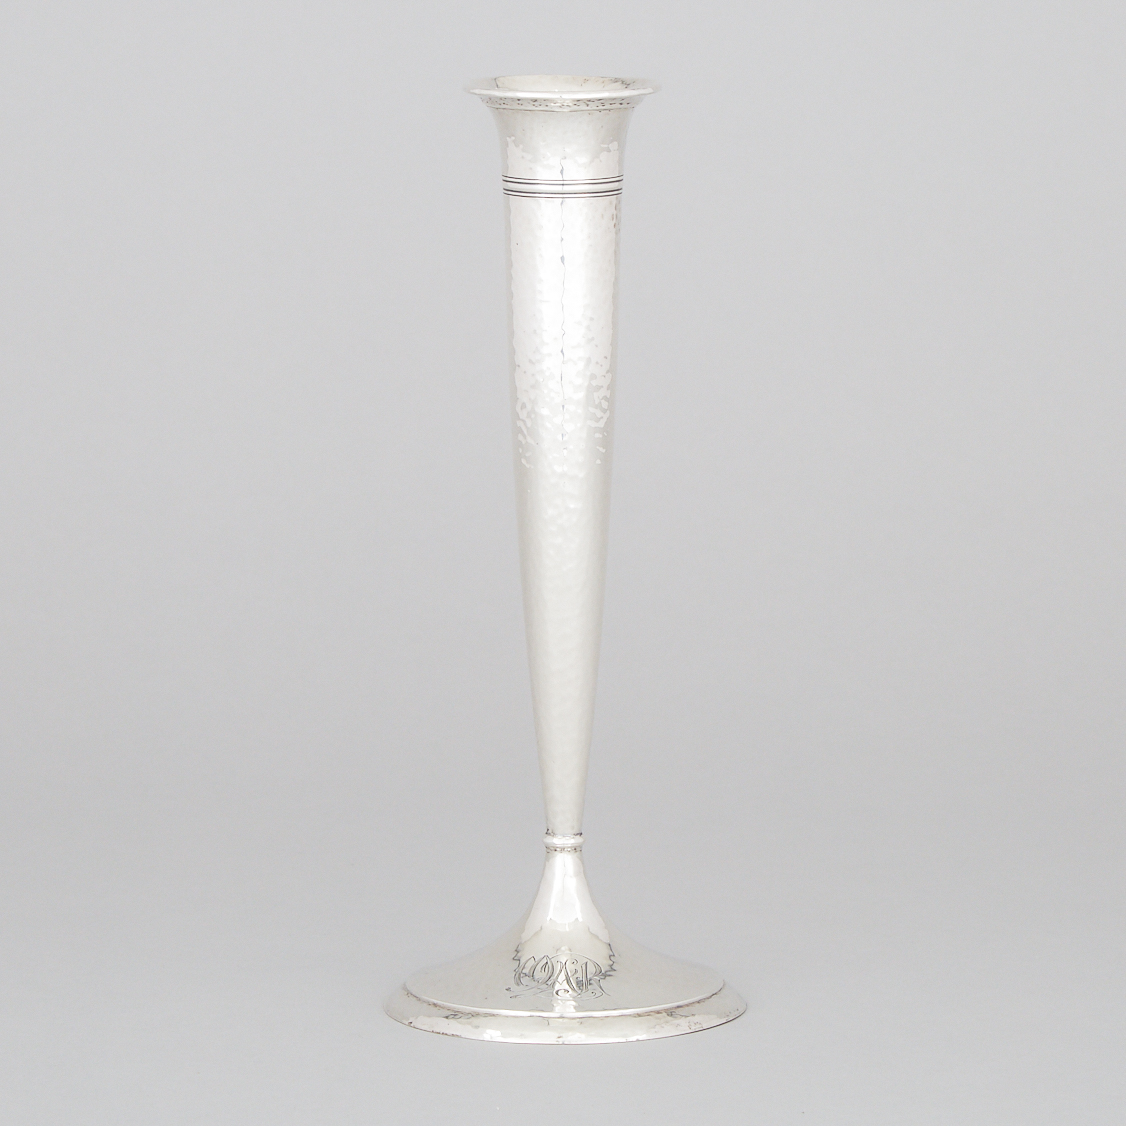 American Silver Bud Vase, Gorham Mfg Co., Providence, R.I., early 20th century